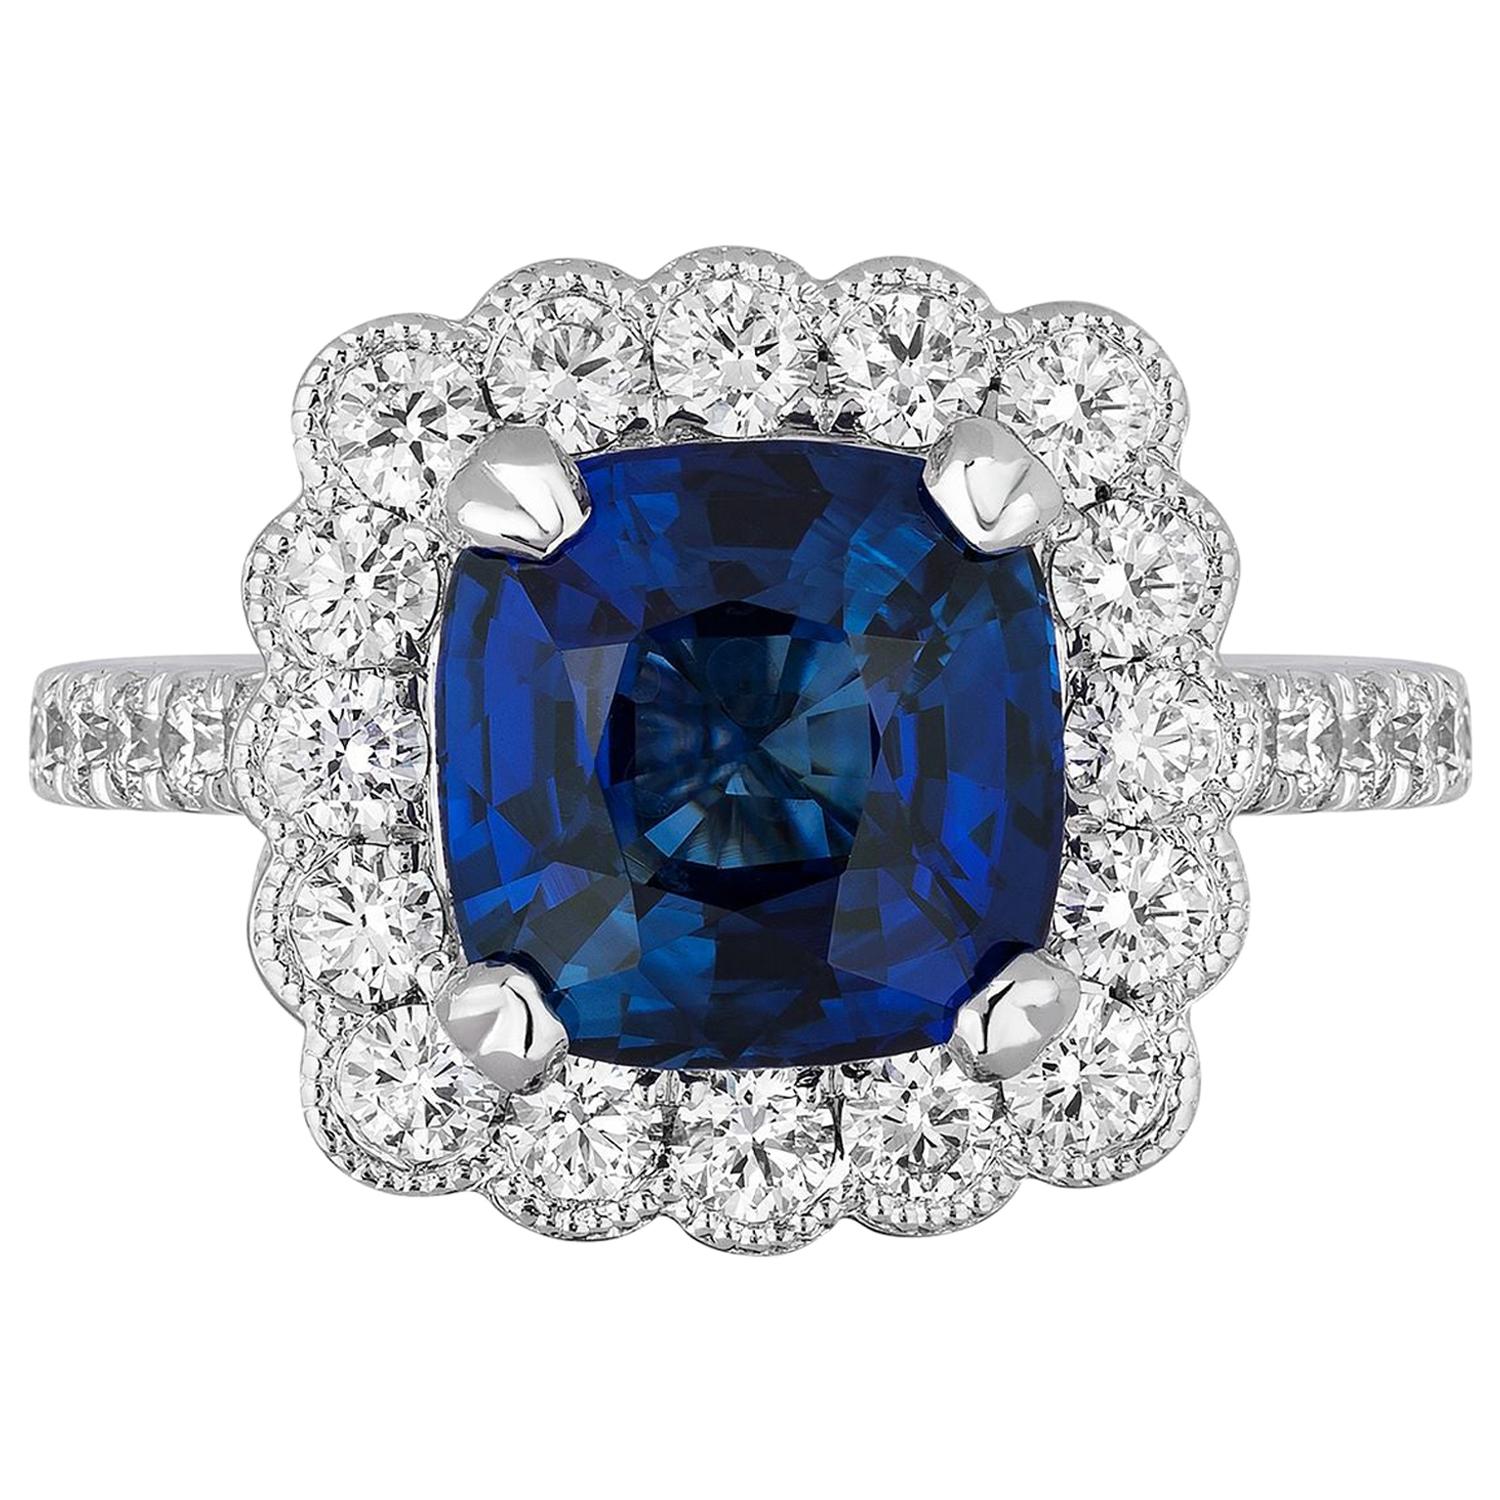 CDC Lab Certified 3.21 Carat Cushion Blue Sapphire Diamonds Cocktail Ring